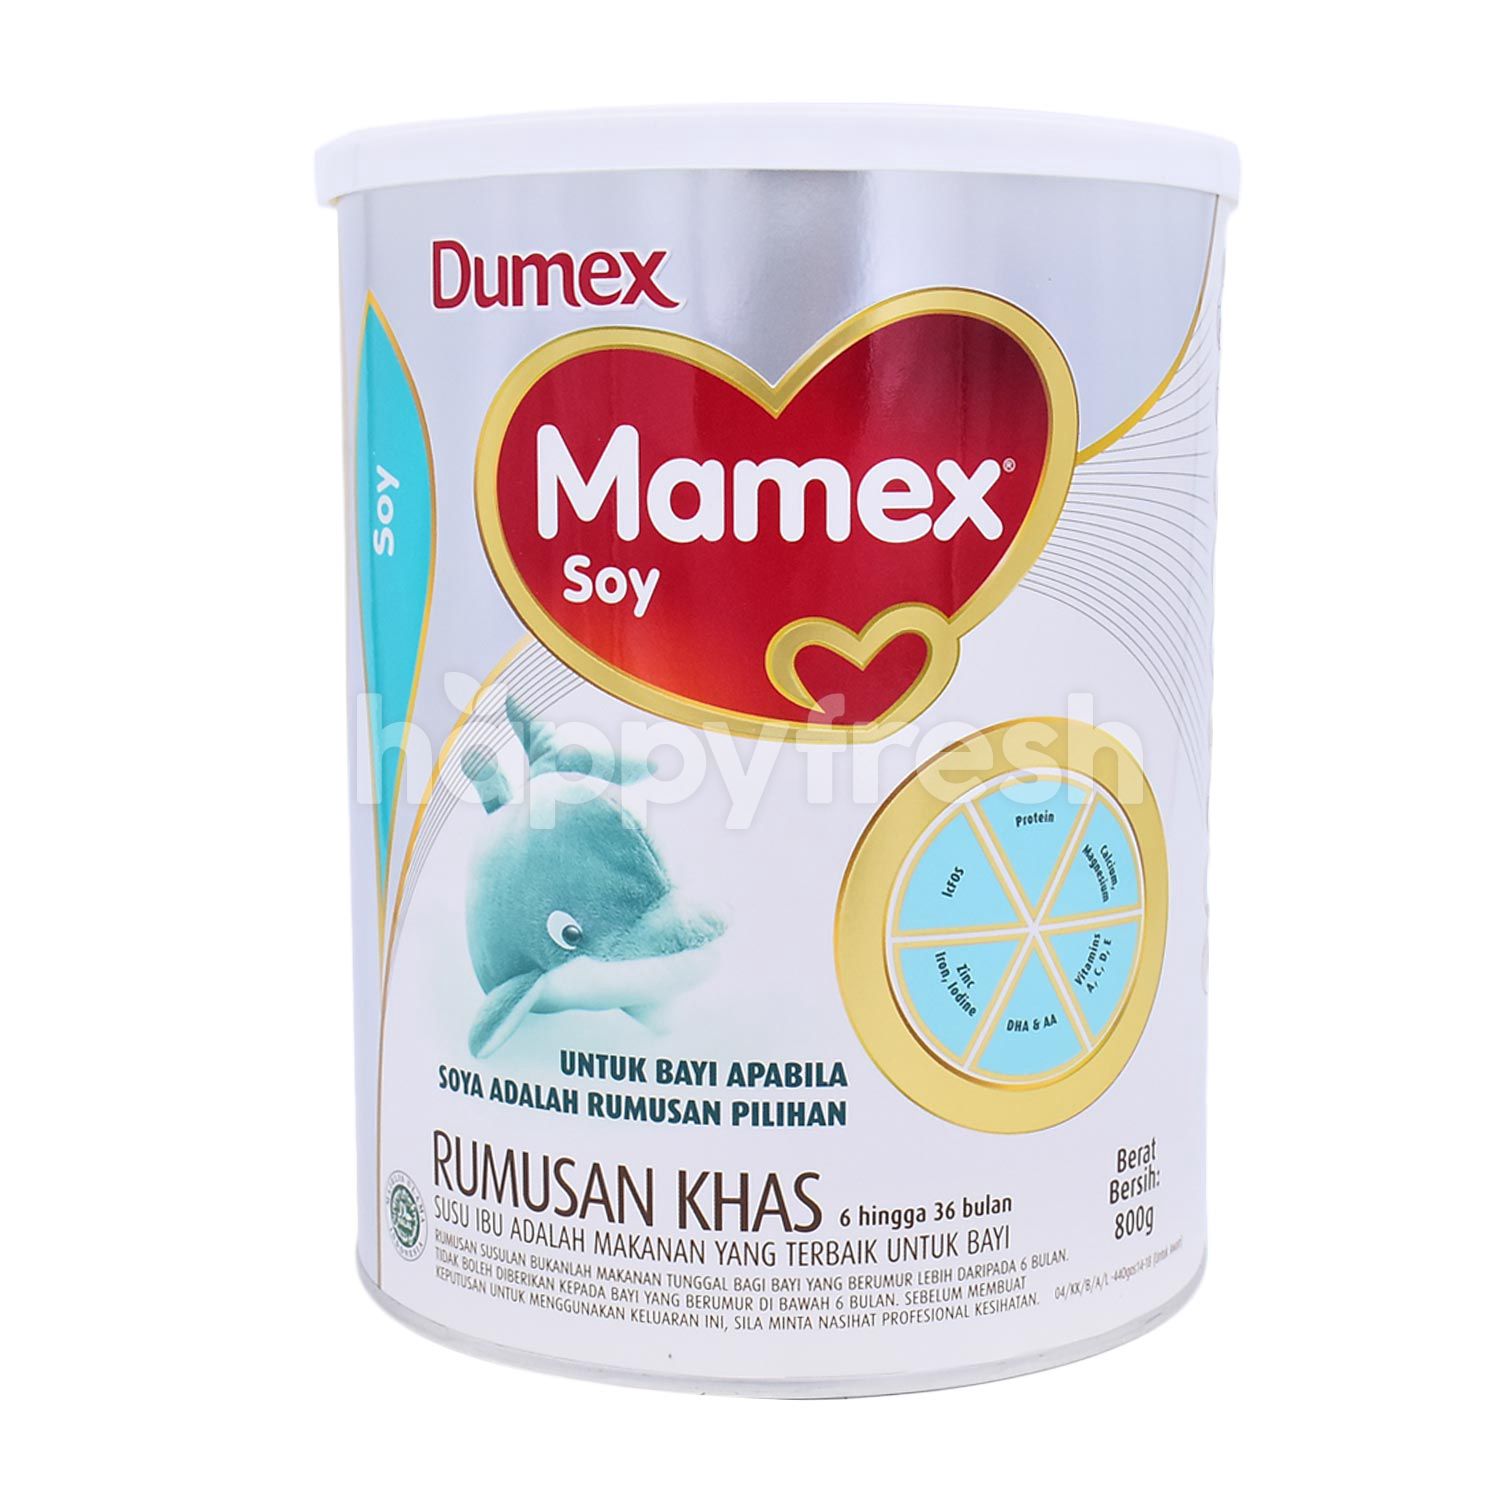 dumex baby milk powder